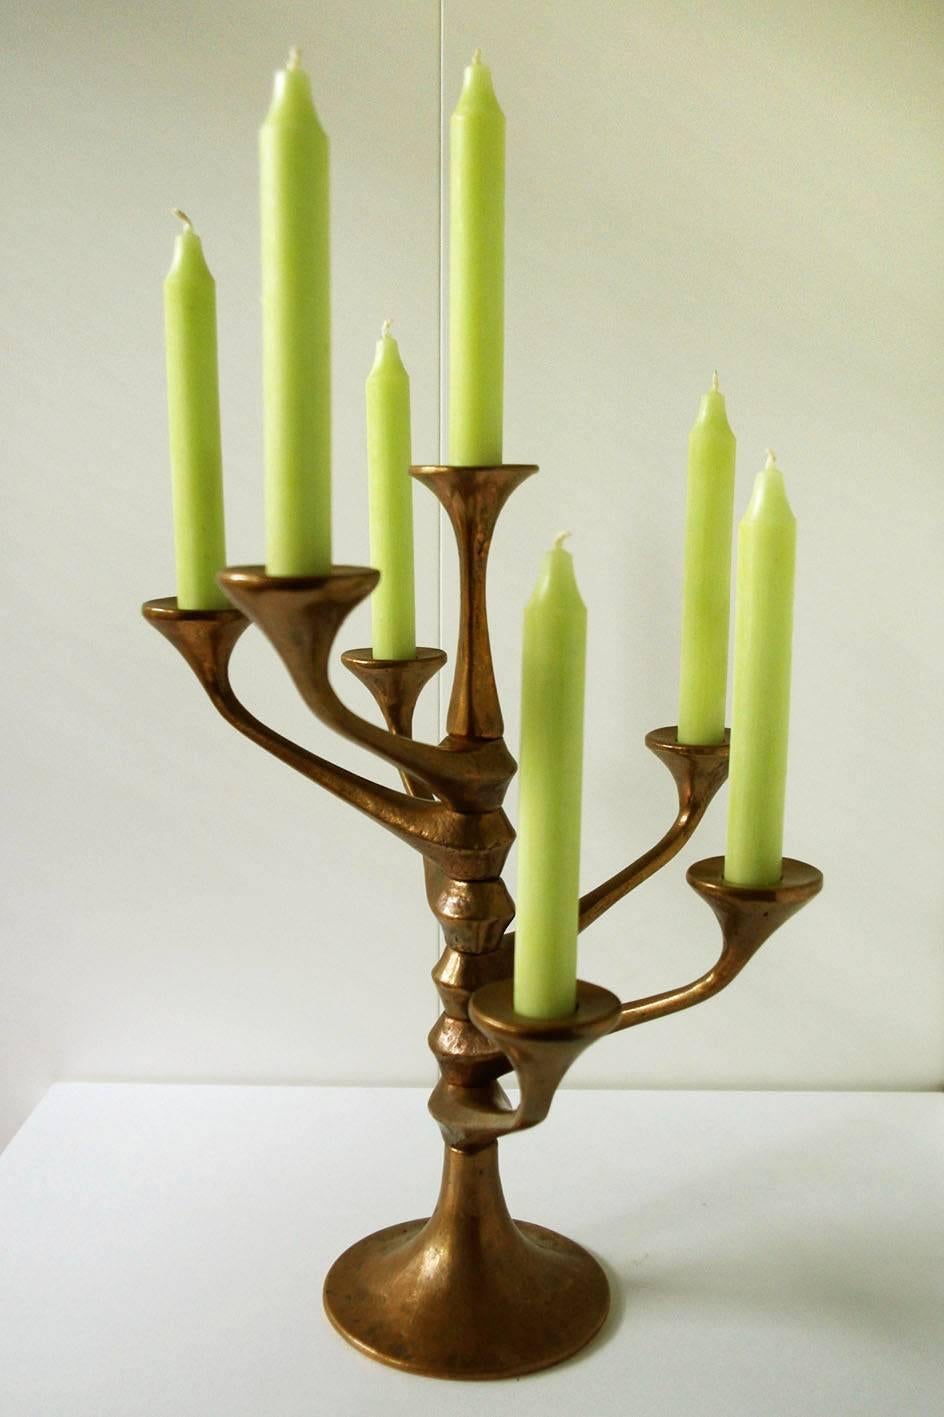 Skulpturaler dänischer moderner Kerzenhalter aus Bronze, 1960er Jahre.
  